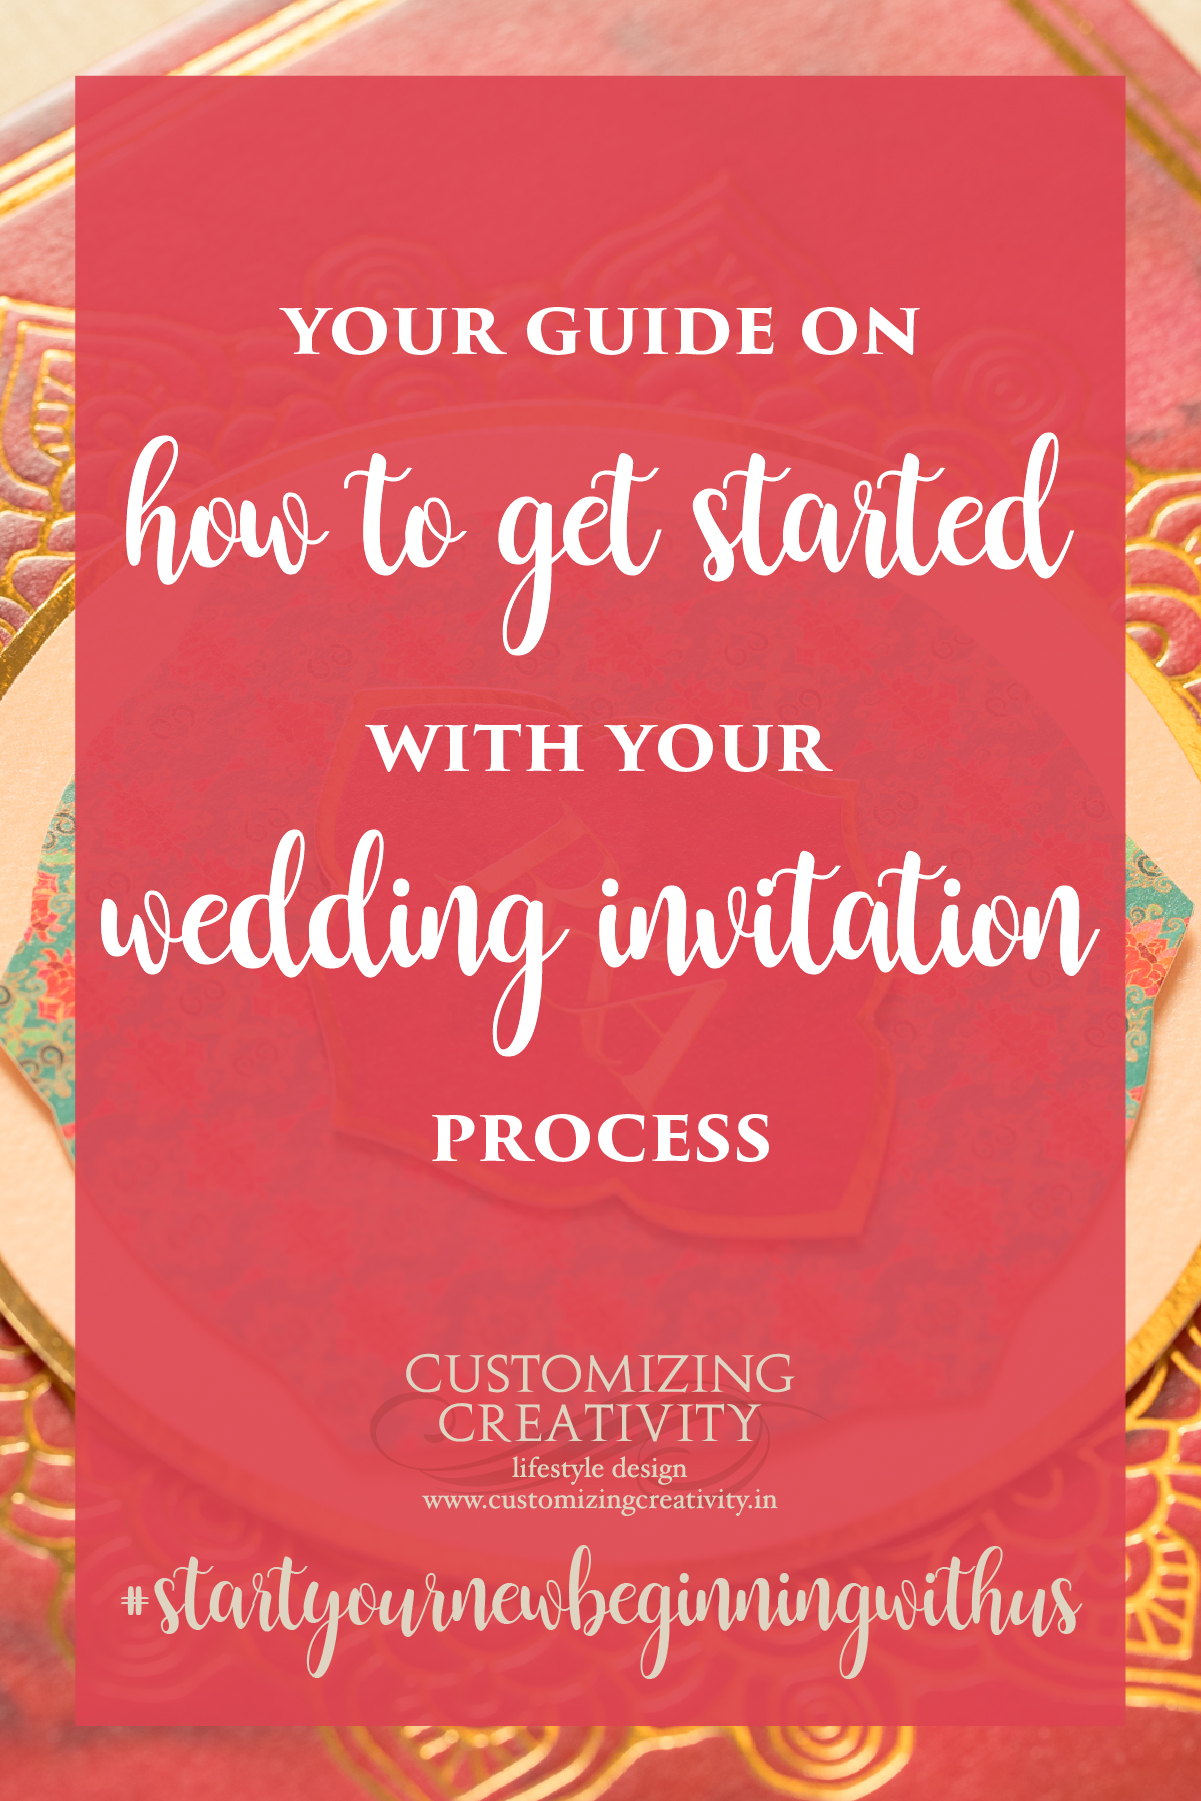 Wedding Invitation cards, wedding invites, save the date, wedding logos, Indian wedding invites, Indian wedding cards